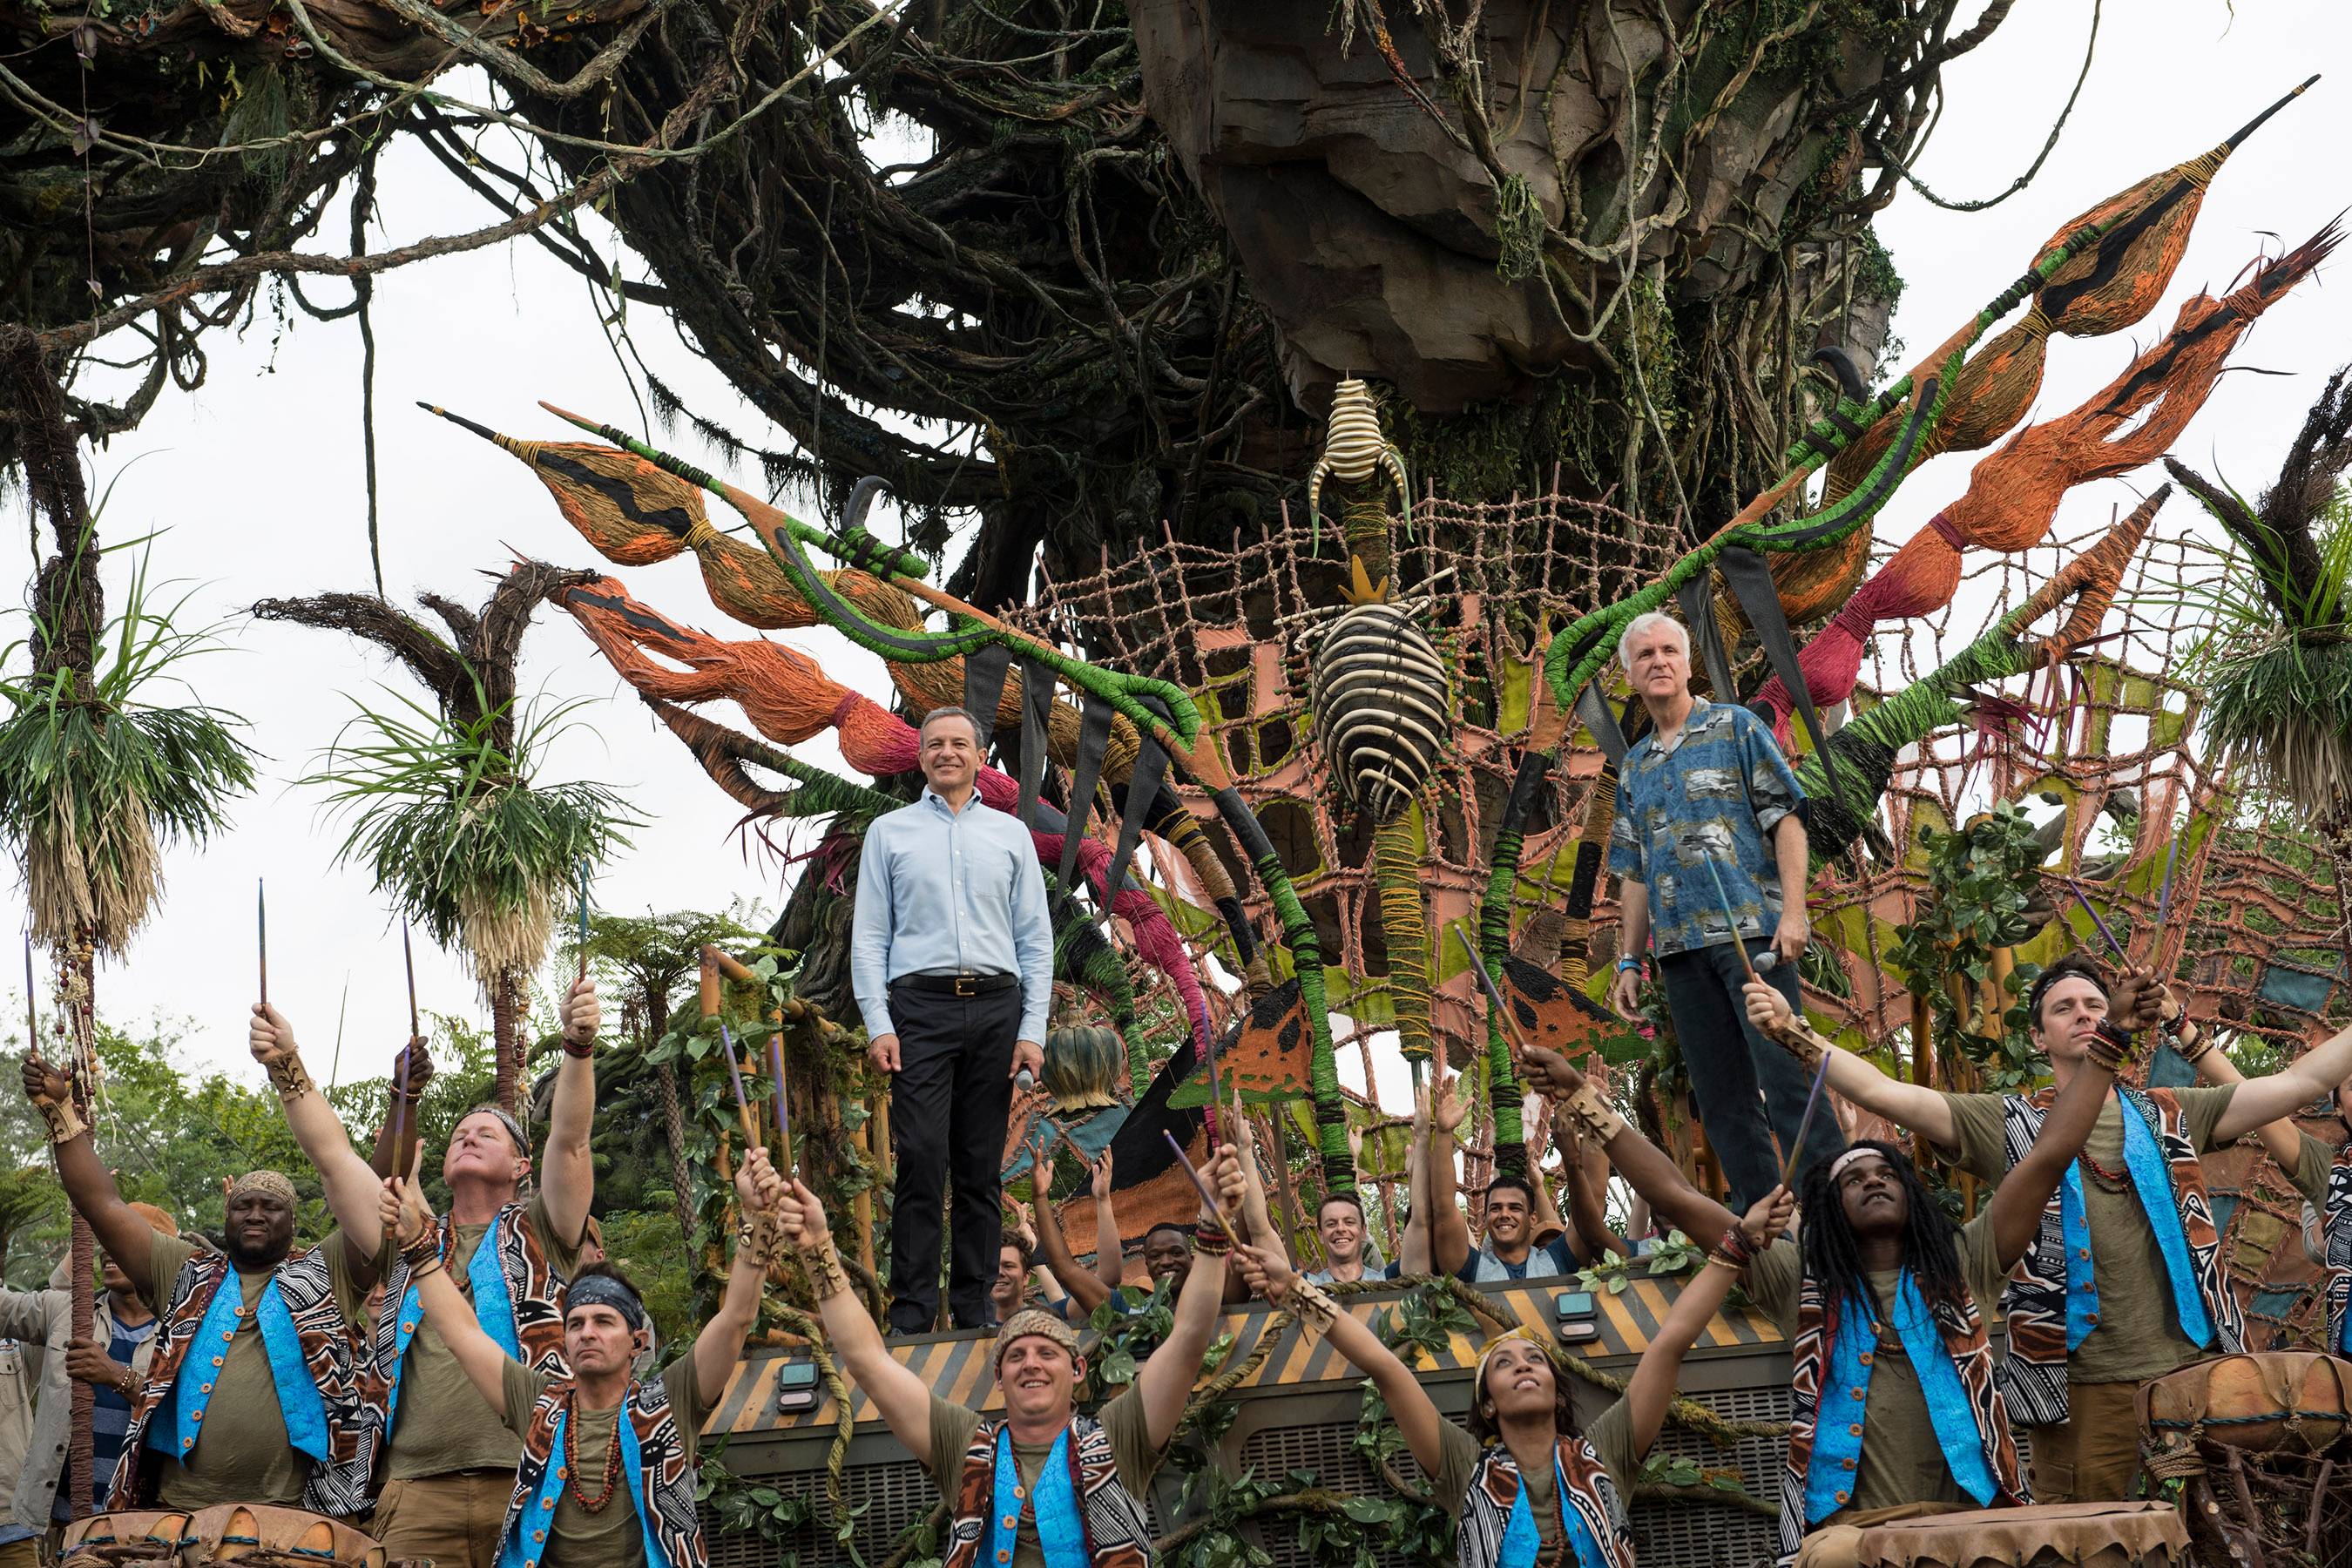 VIDEO - Disney dedicates Pandora - The World of Avatar